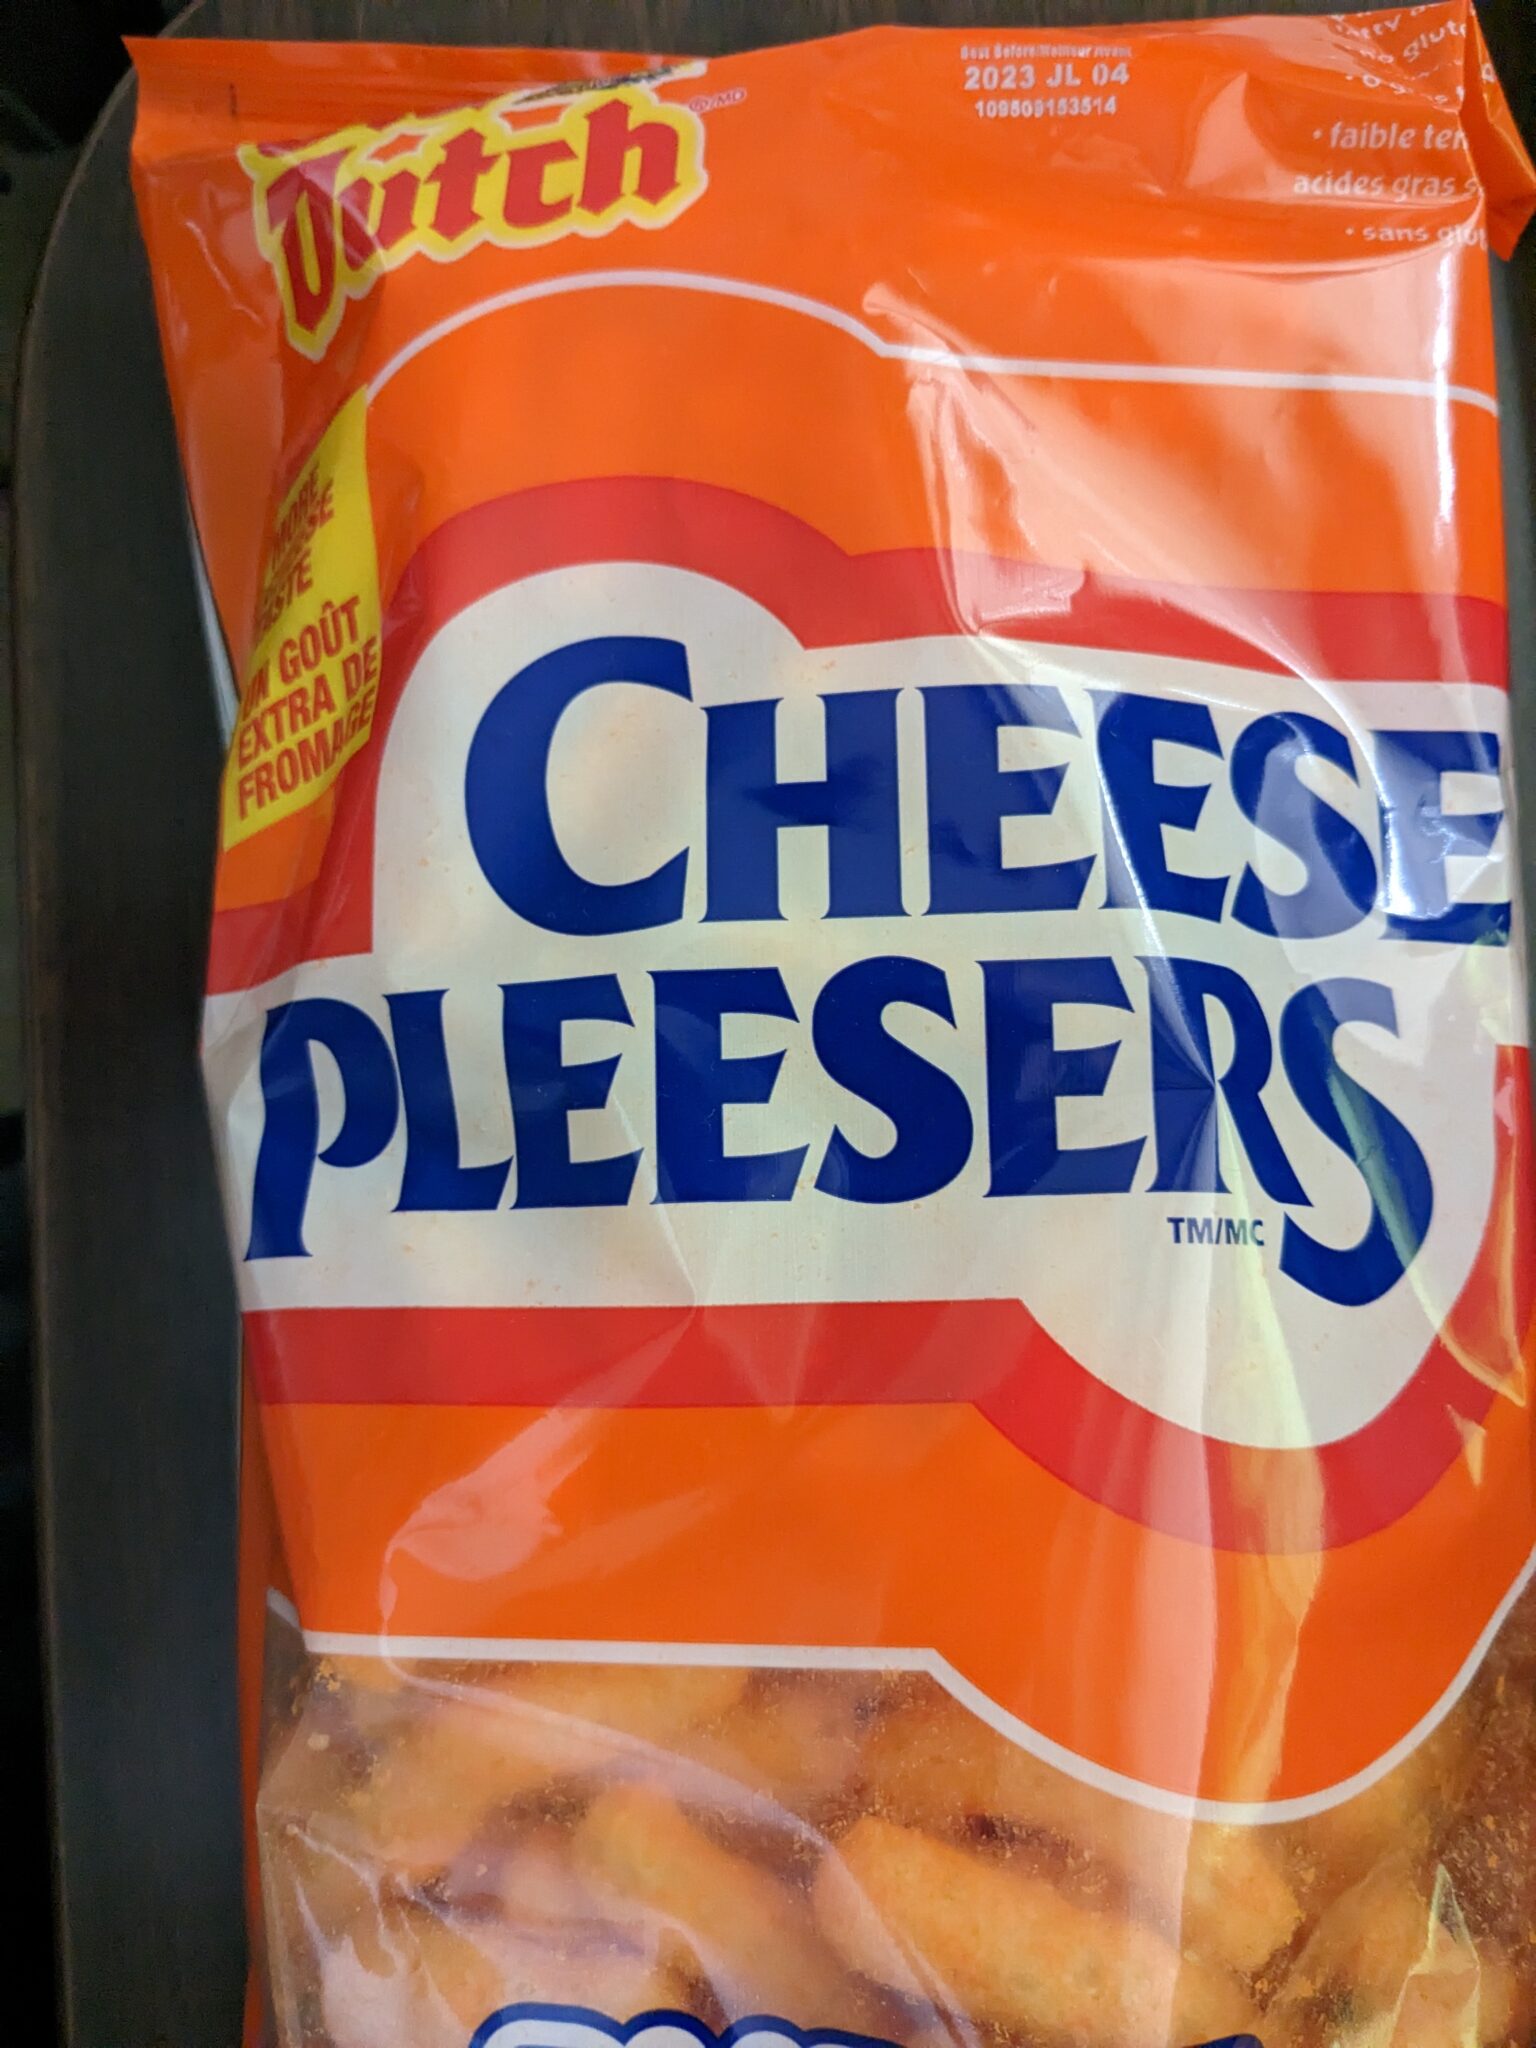 Old Dutch – Cheese Pleesers